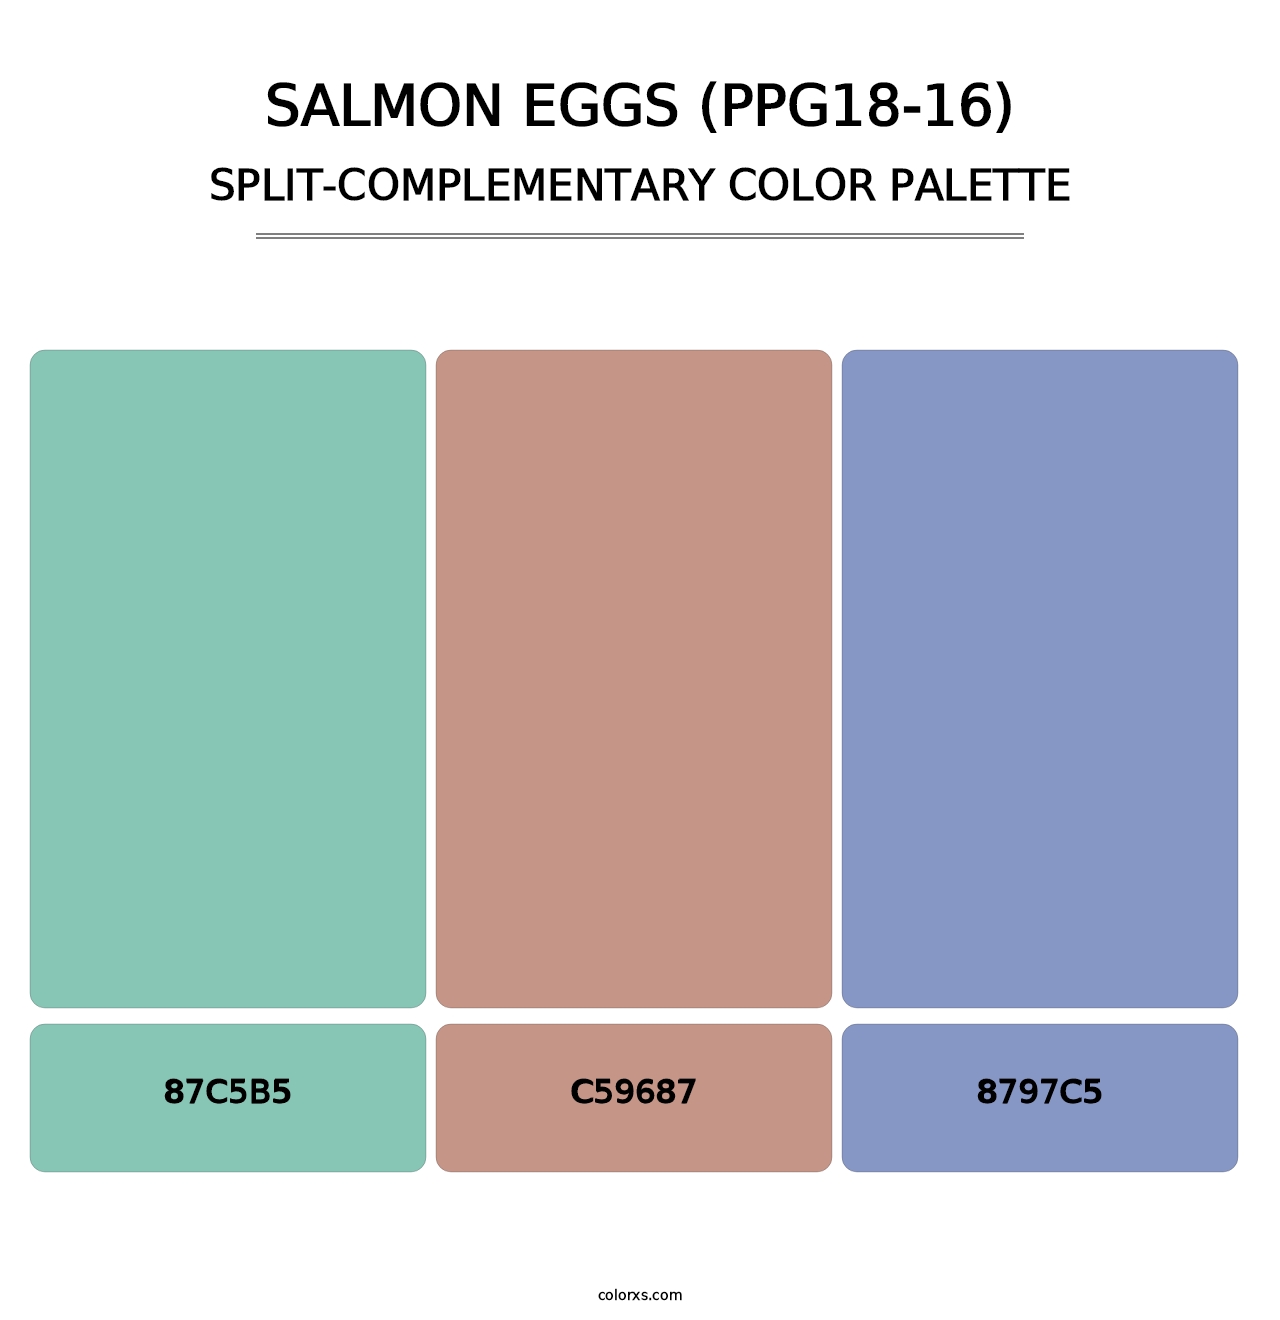 Salmon Eggs (PPG18-16) - Split-Complementary Color Palette